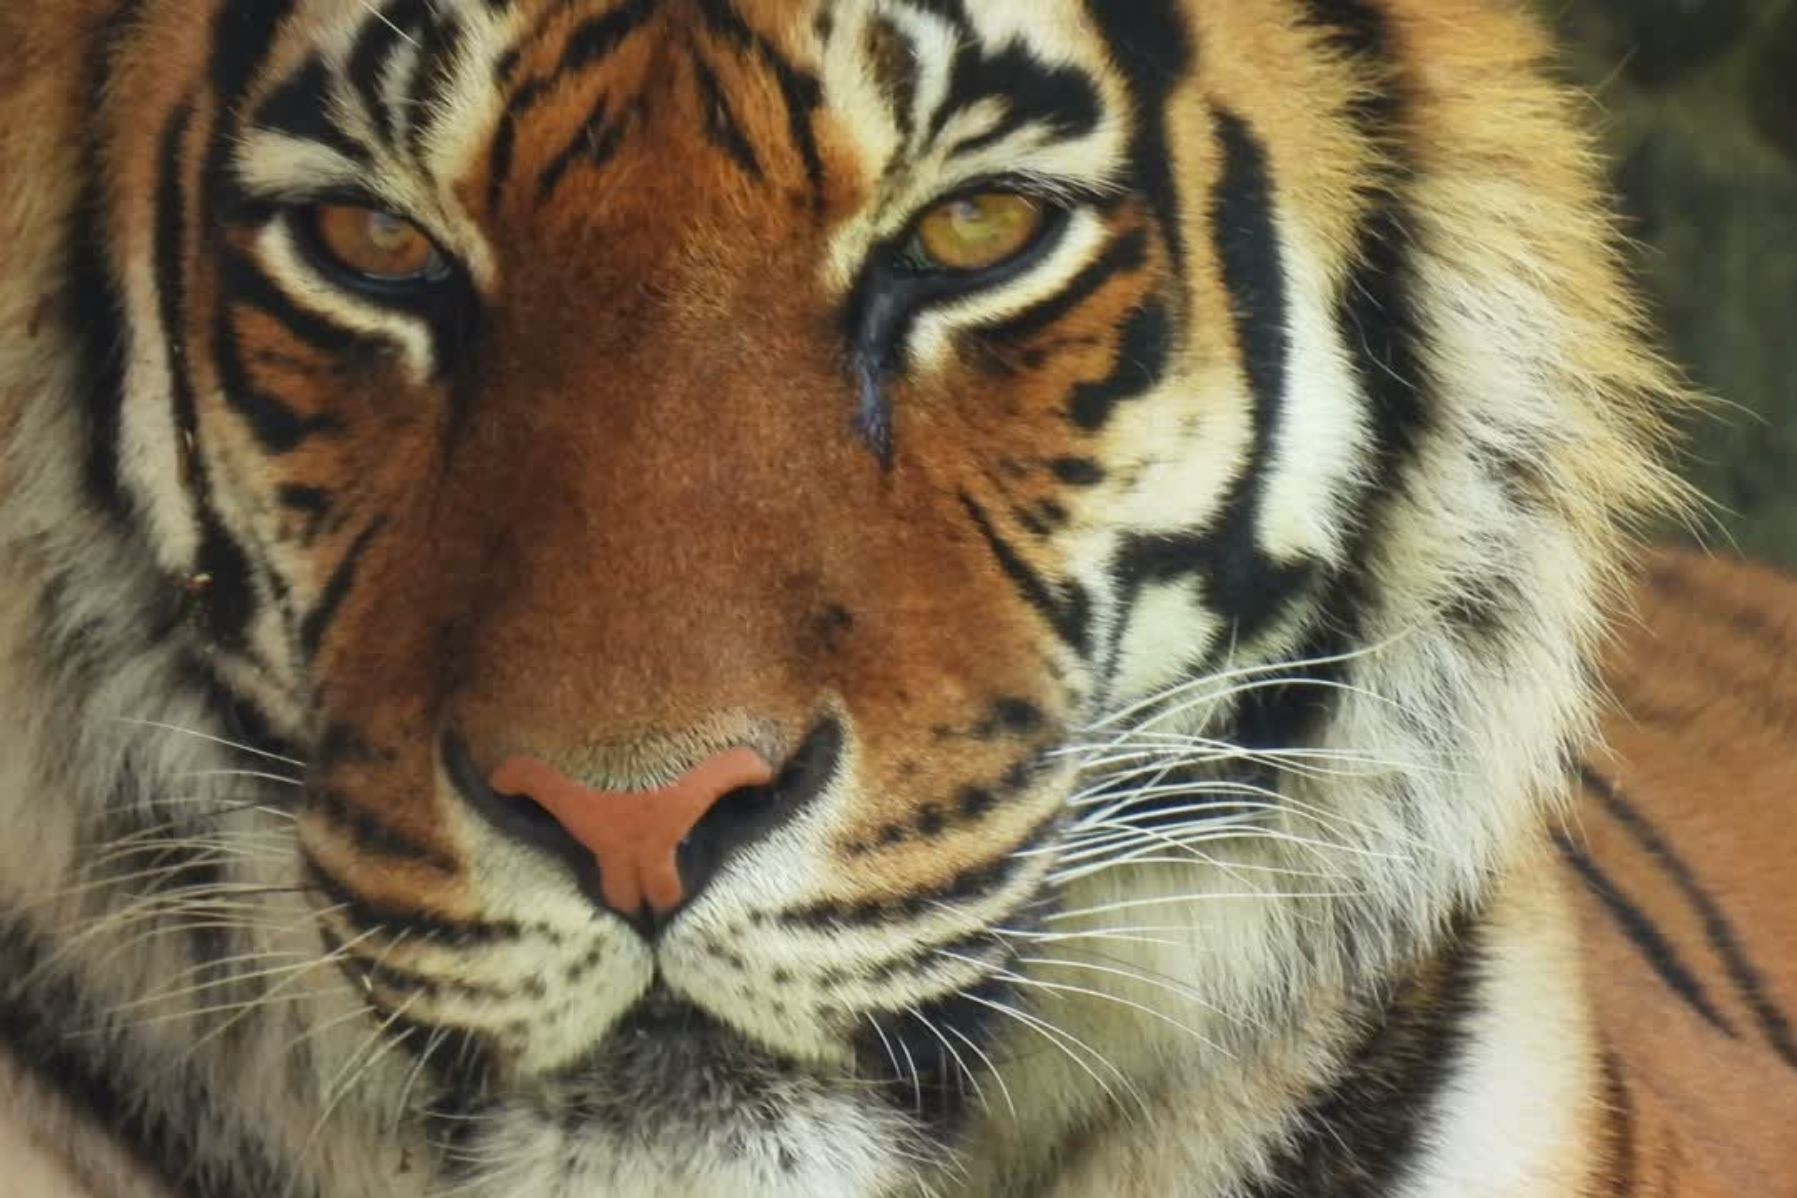 A closeup of a tiger's eyes